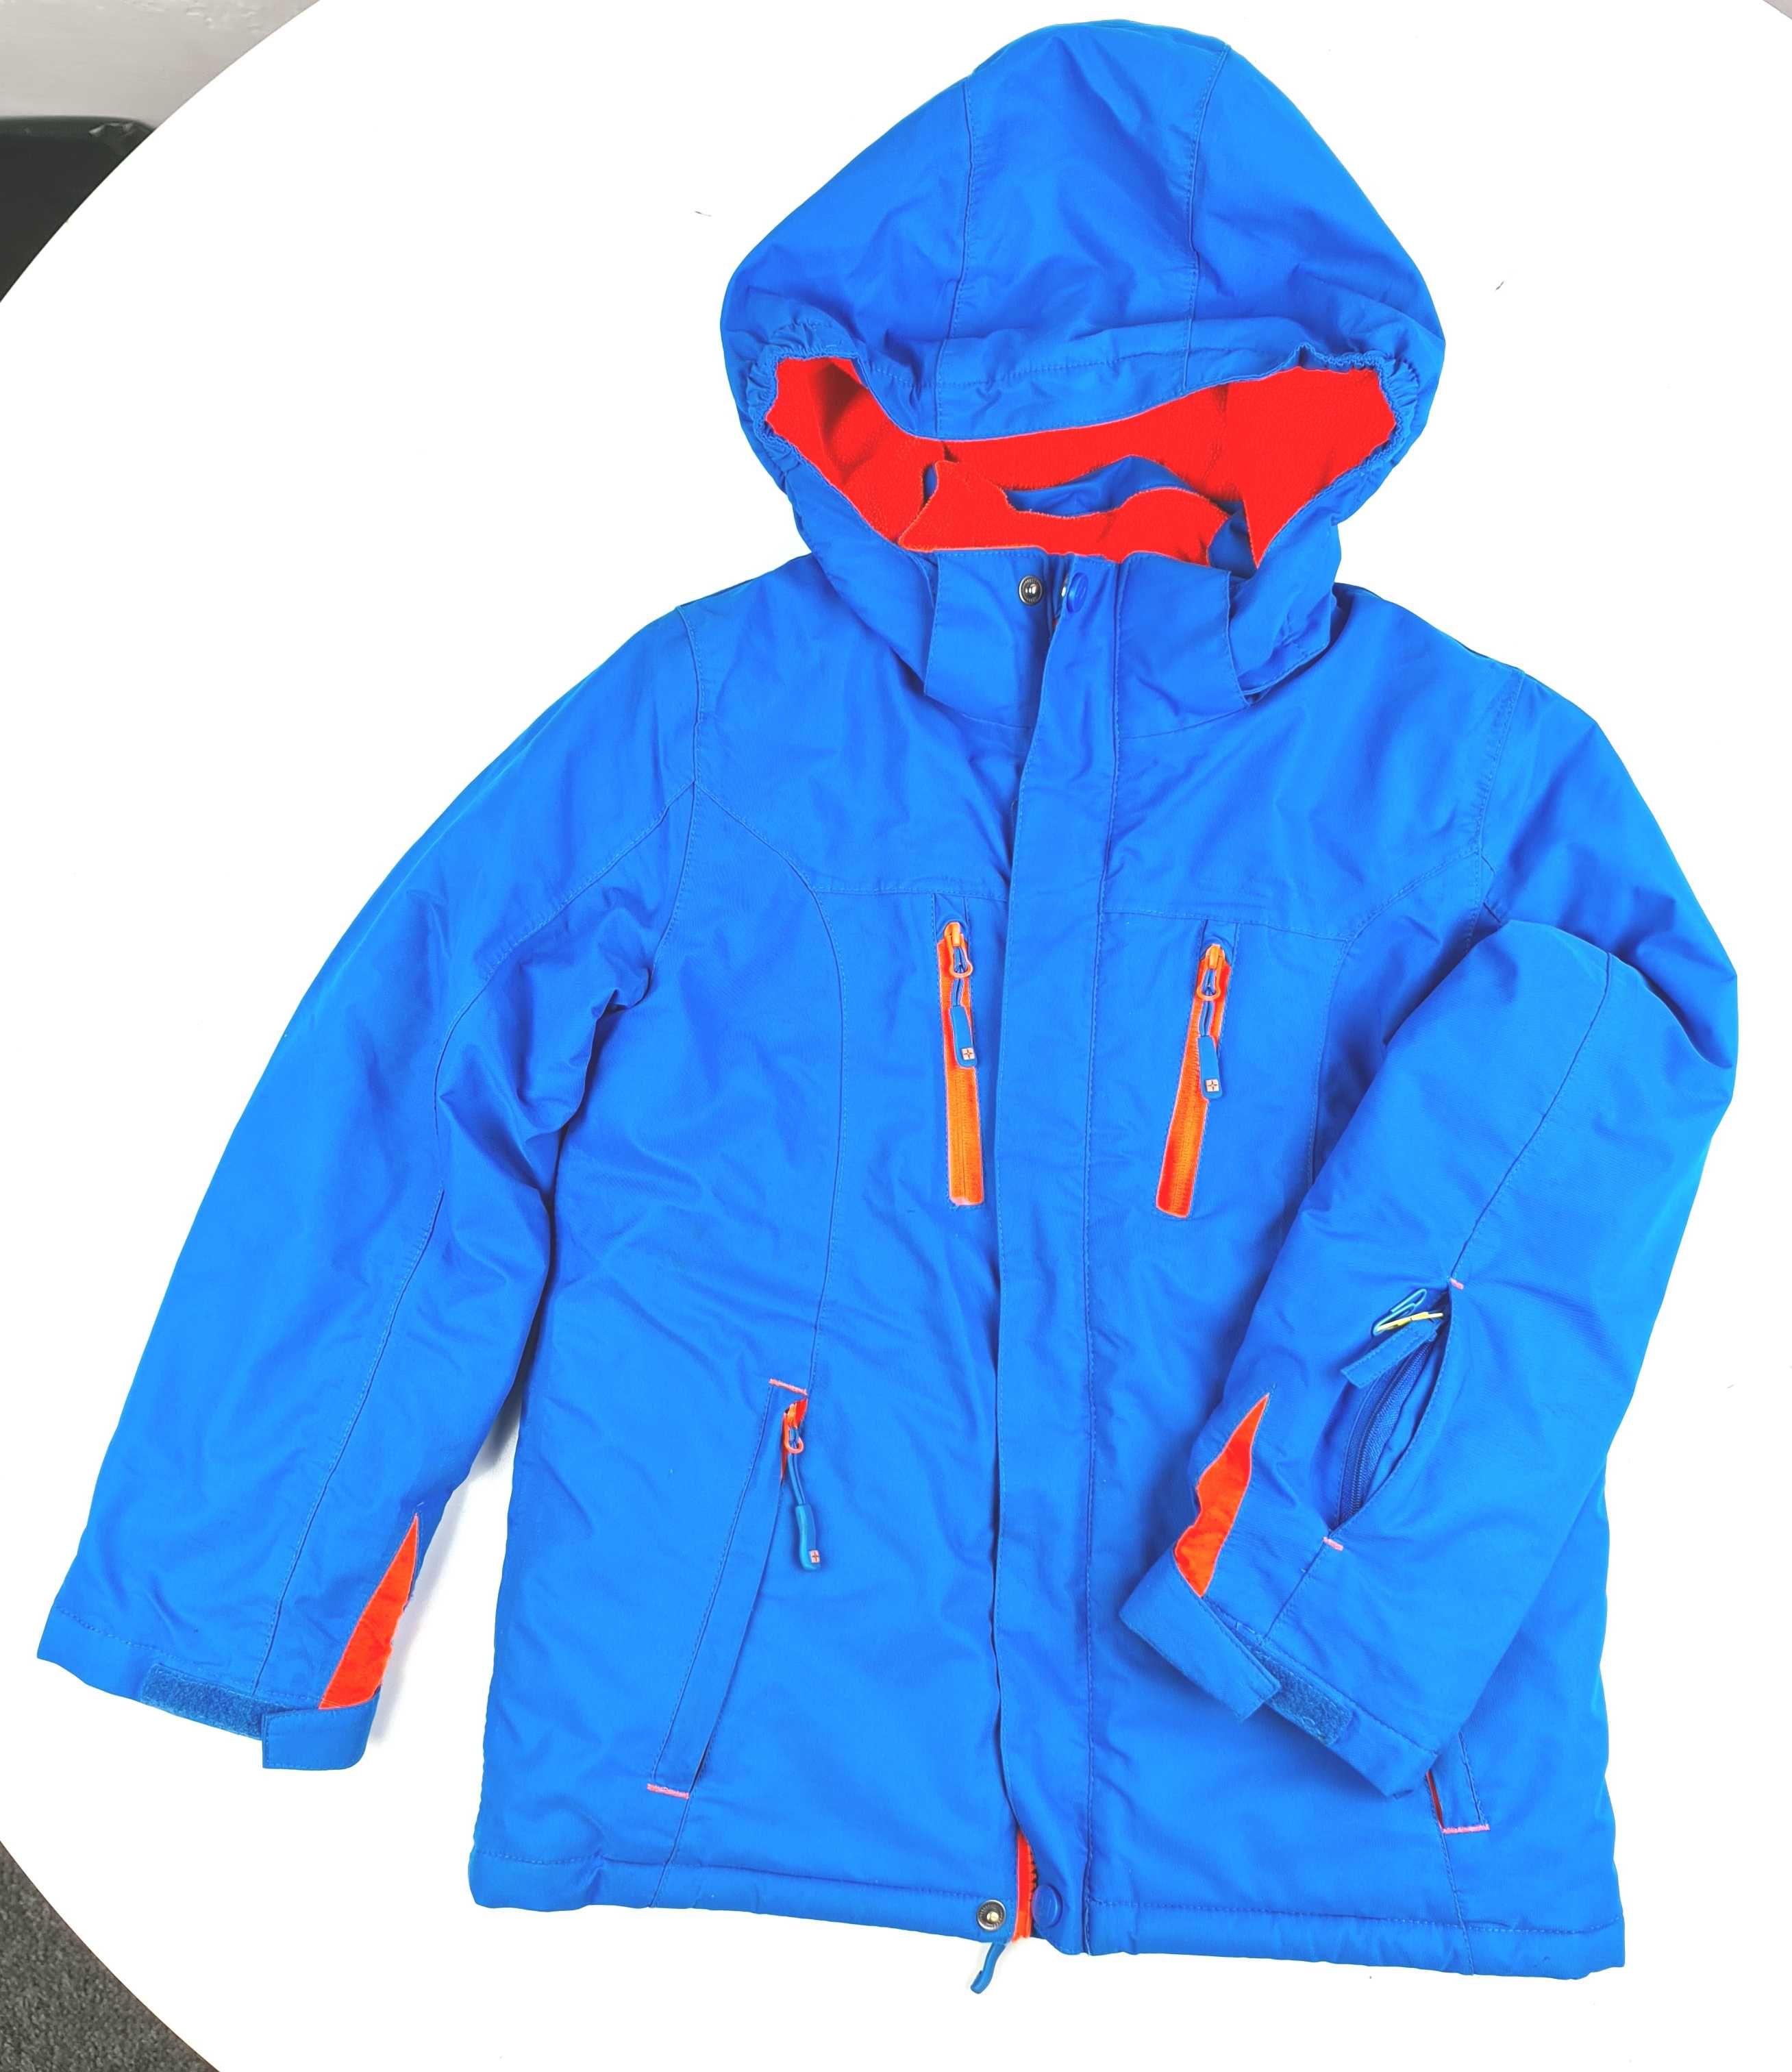 Kurtka narciarska MOUNTAIN WAREHOUSE 7-8 lat, niebieska